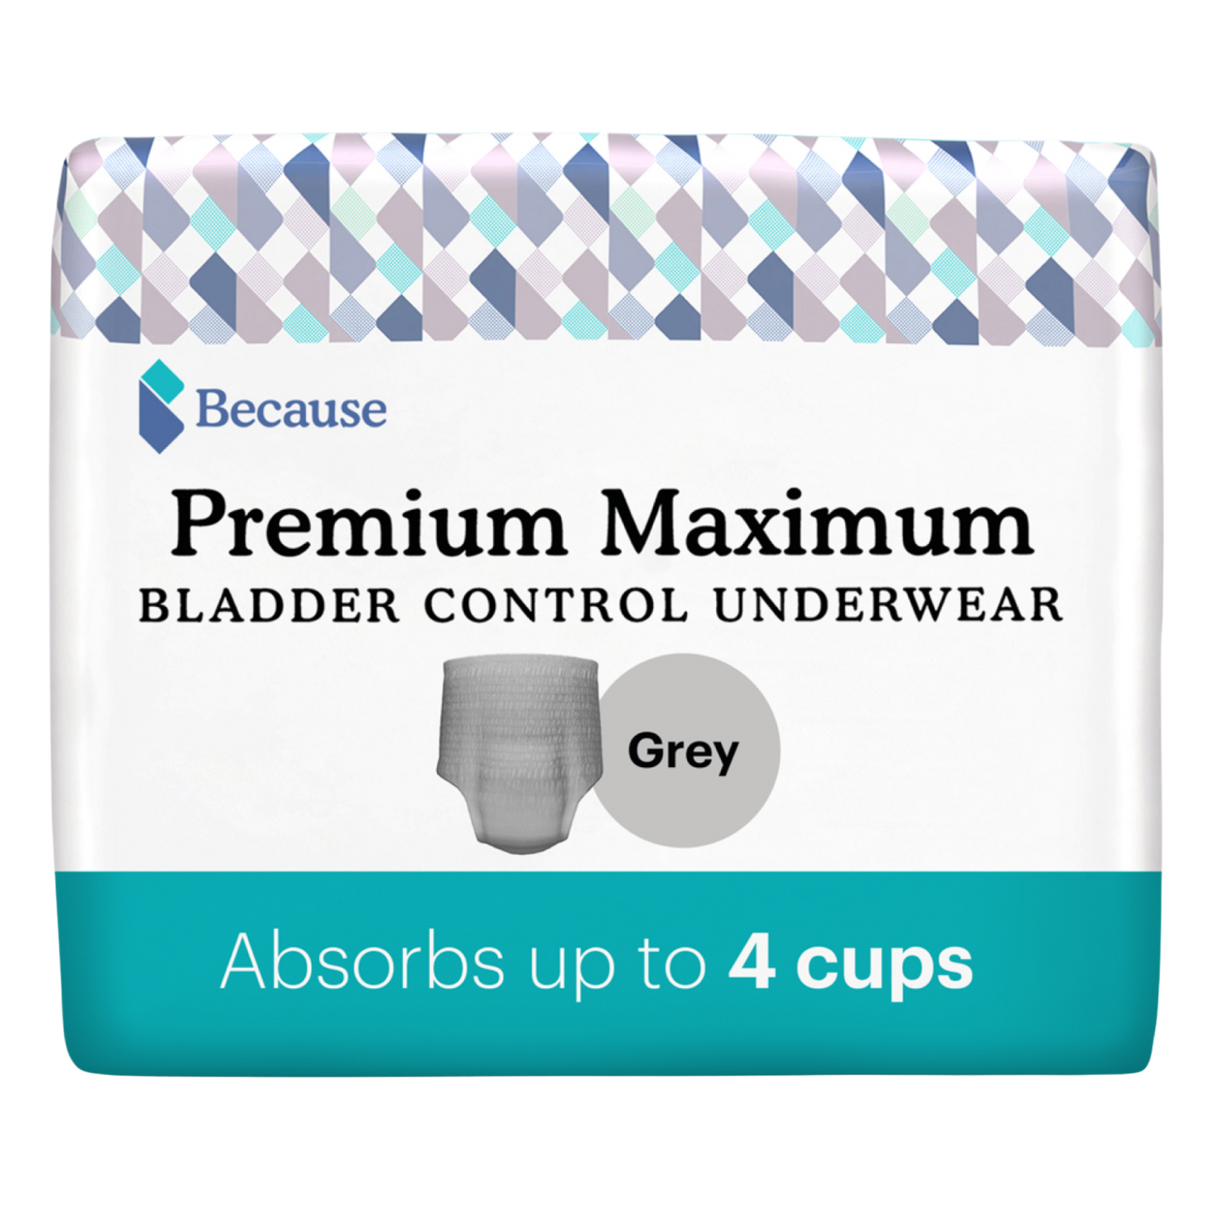 Starter Kit of Premium Maximum Underwear - Grey